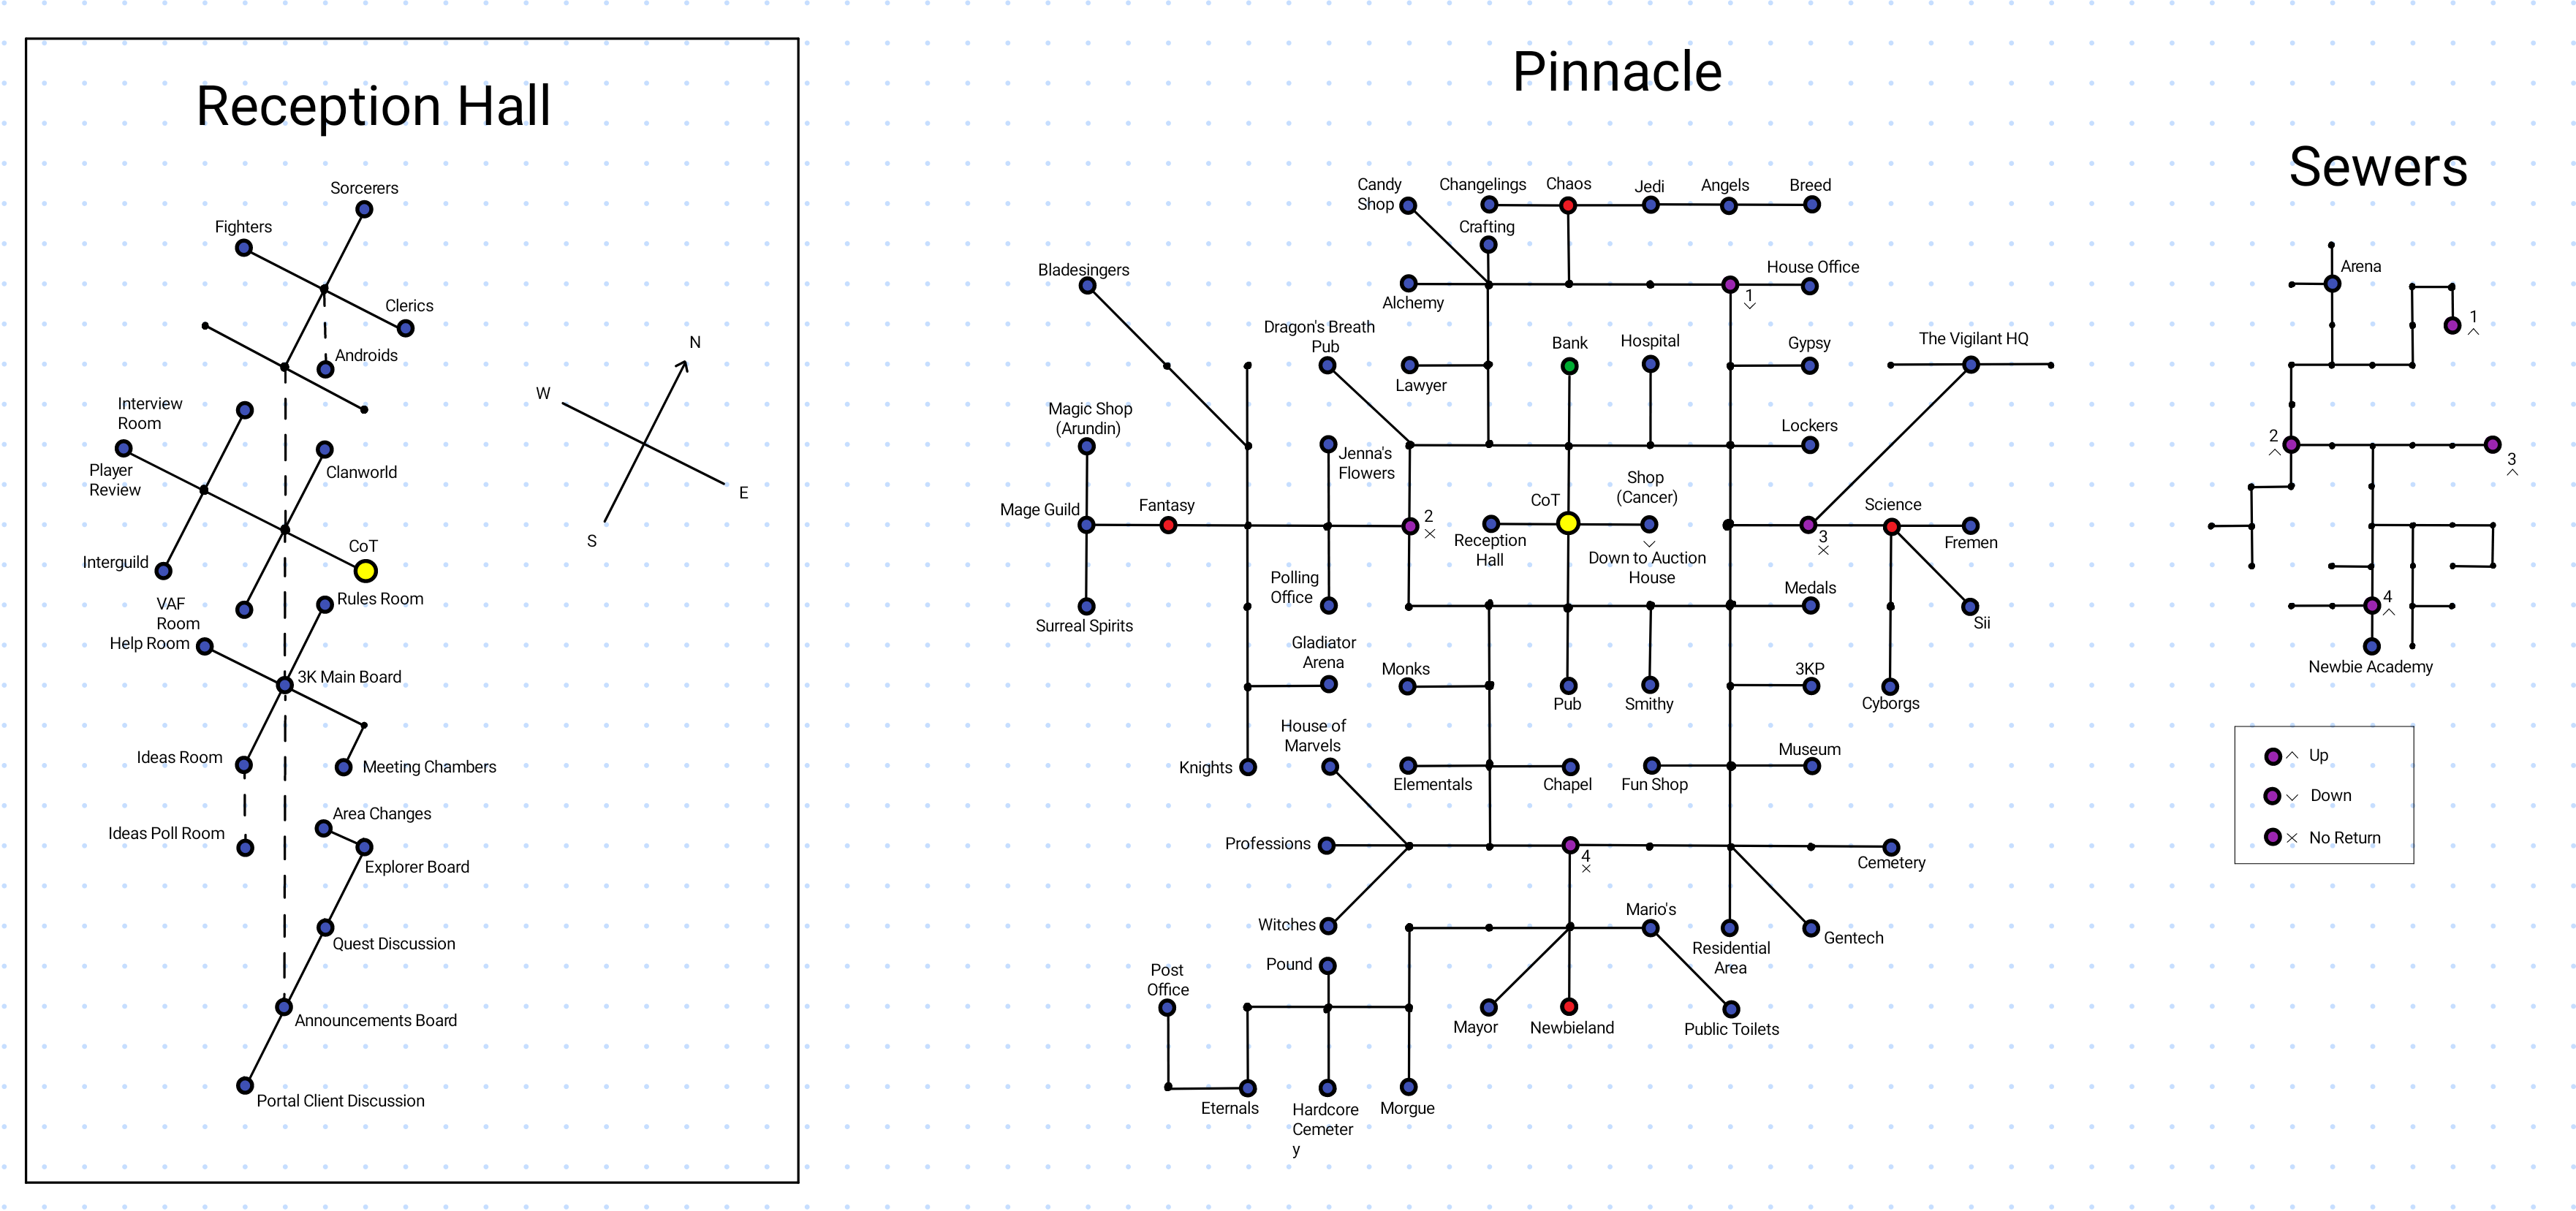 Map of Pinnacle